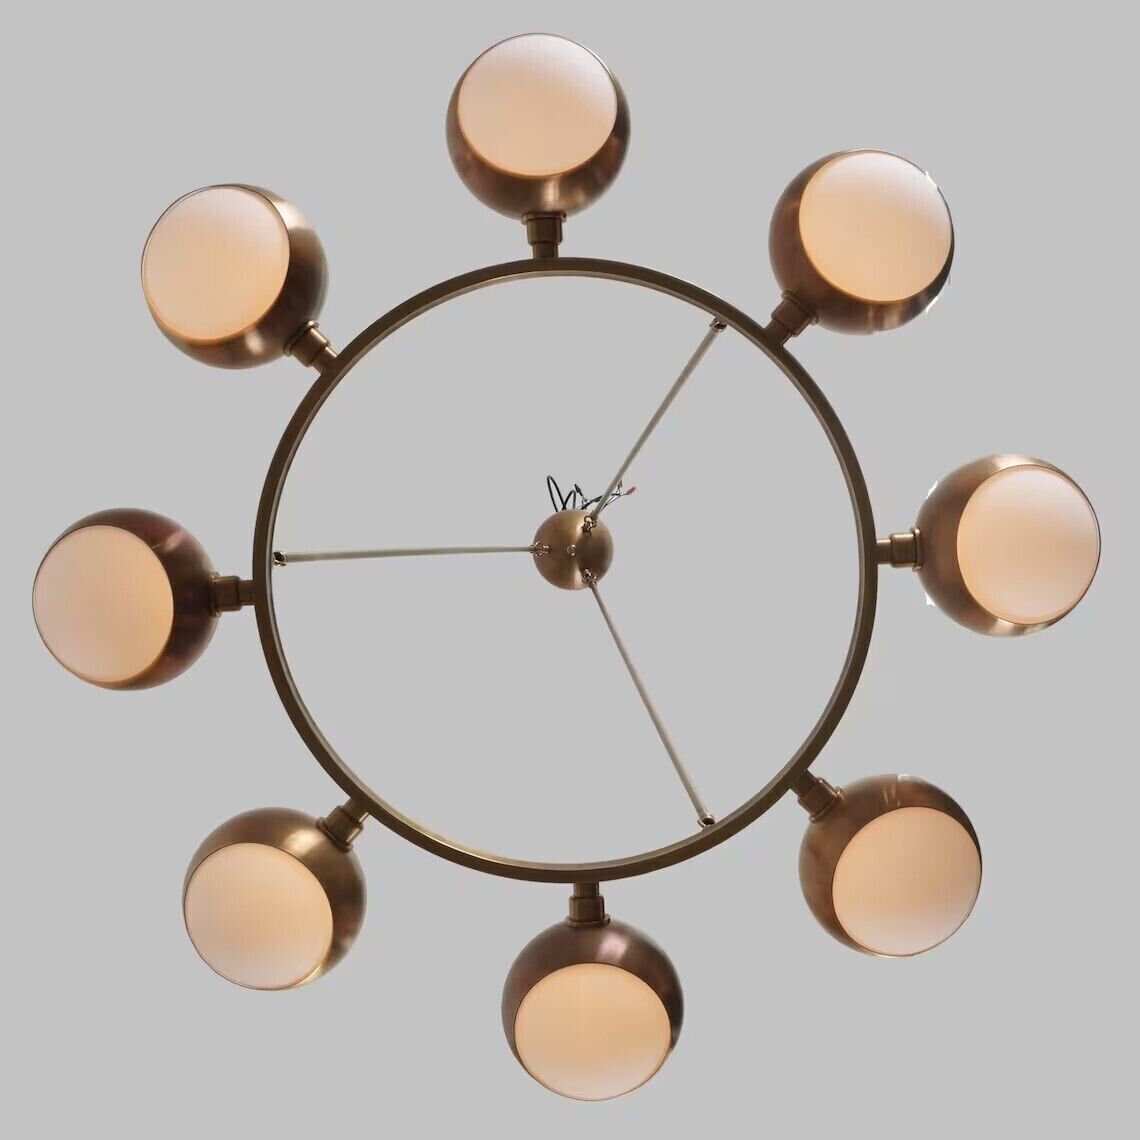 Stilnovo 8 Globe Raw Brass Chandelier Light Fixture Modern Sputnik Ceiling Light